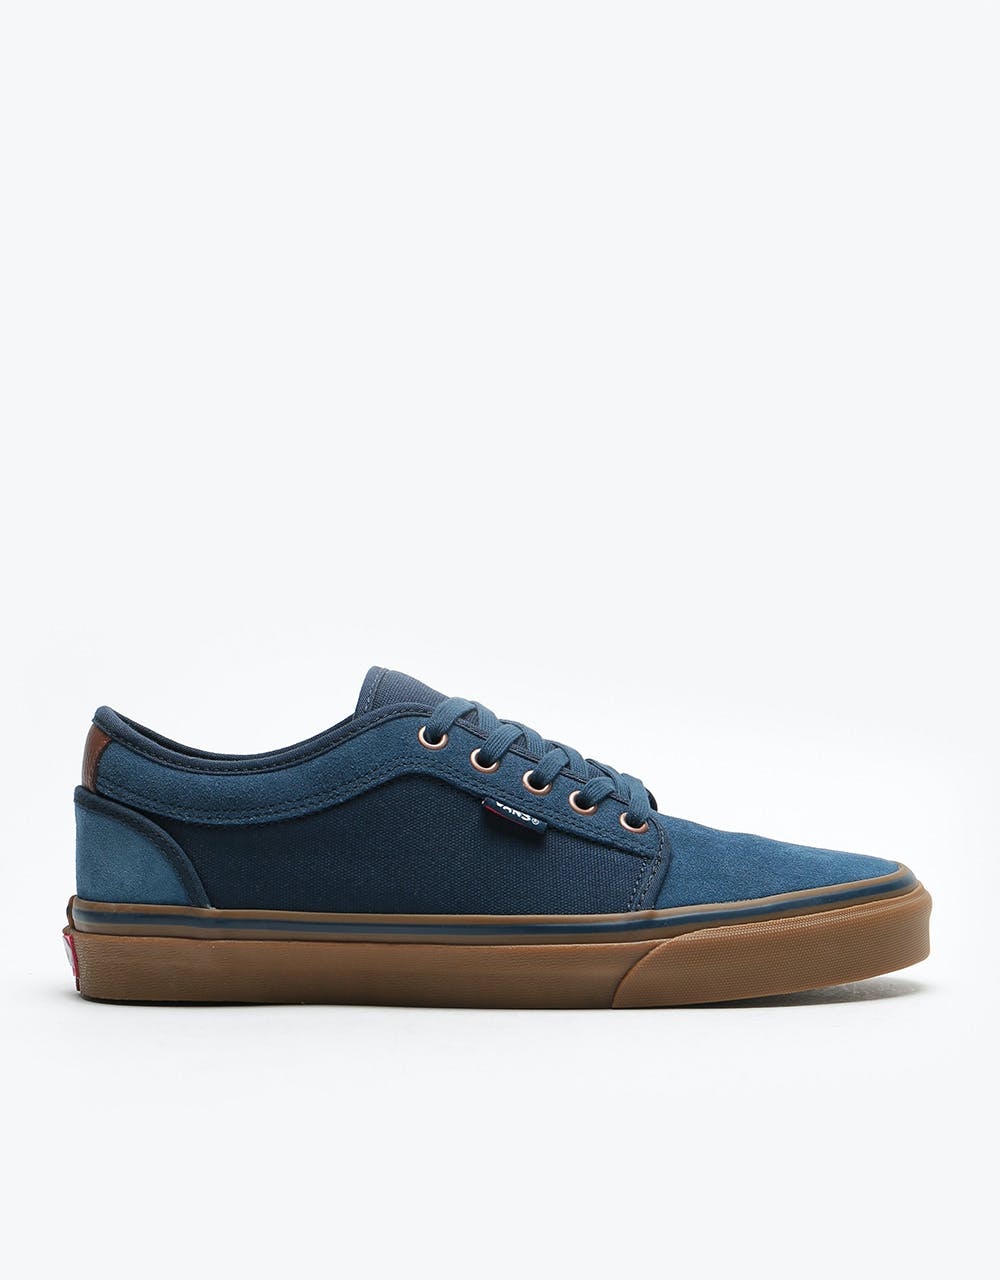 Vans Chukka Low Skate Shoes - Rich Navy/Gum